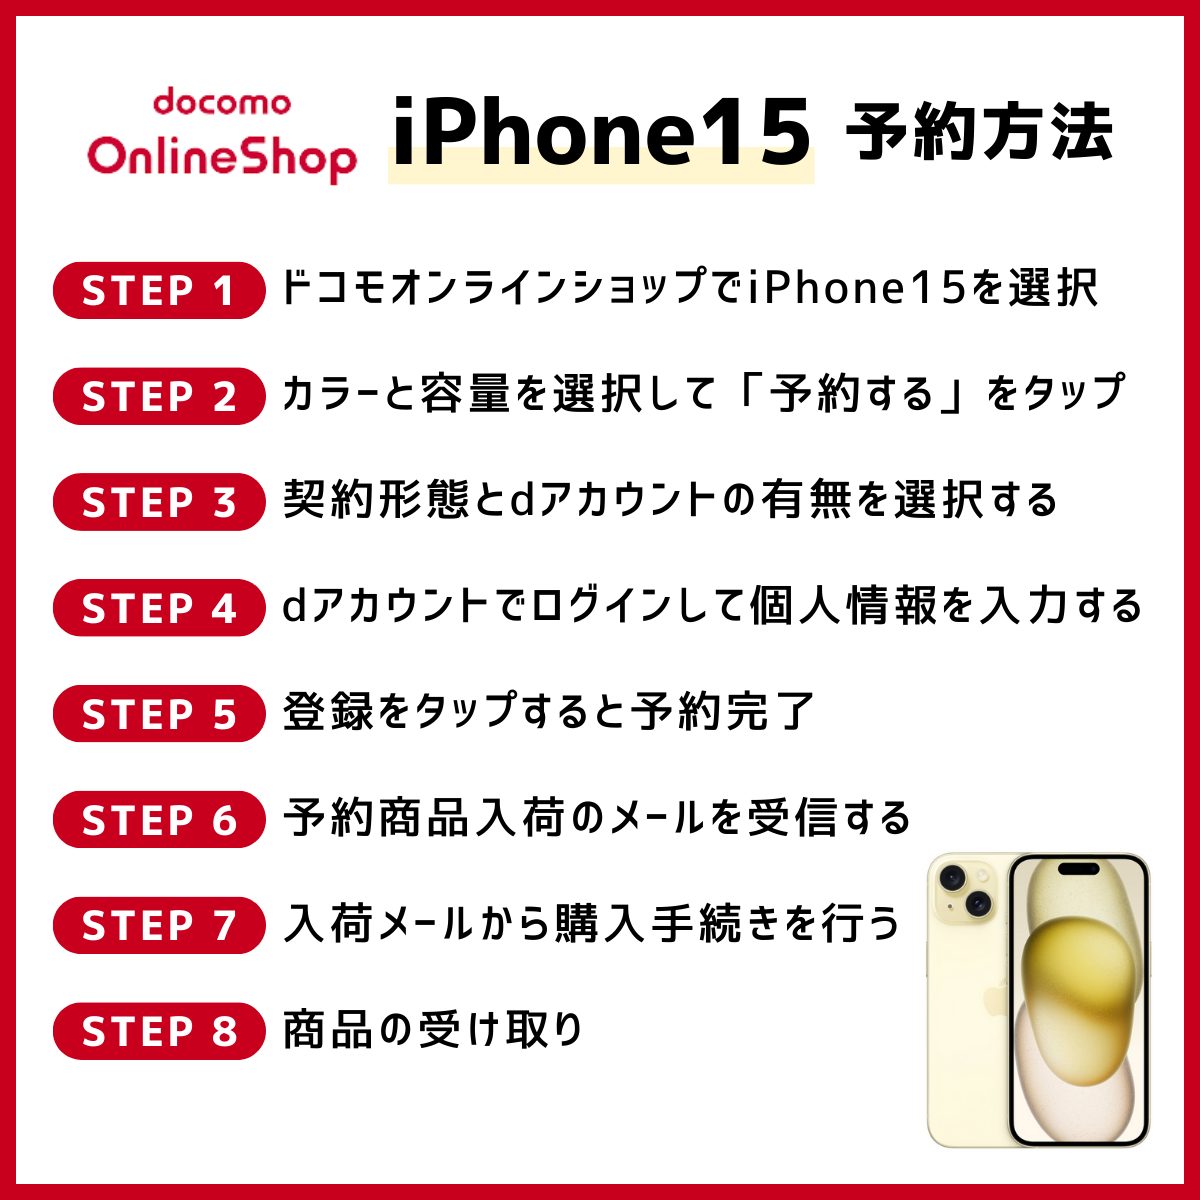 iPhone15をドコモオンラインショップで予約する手順